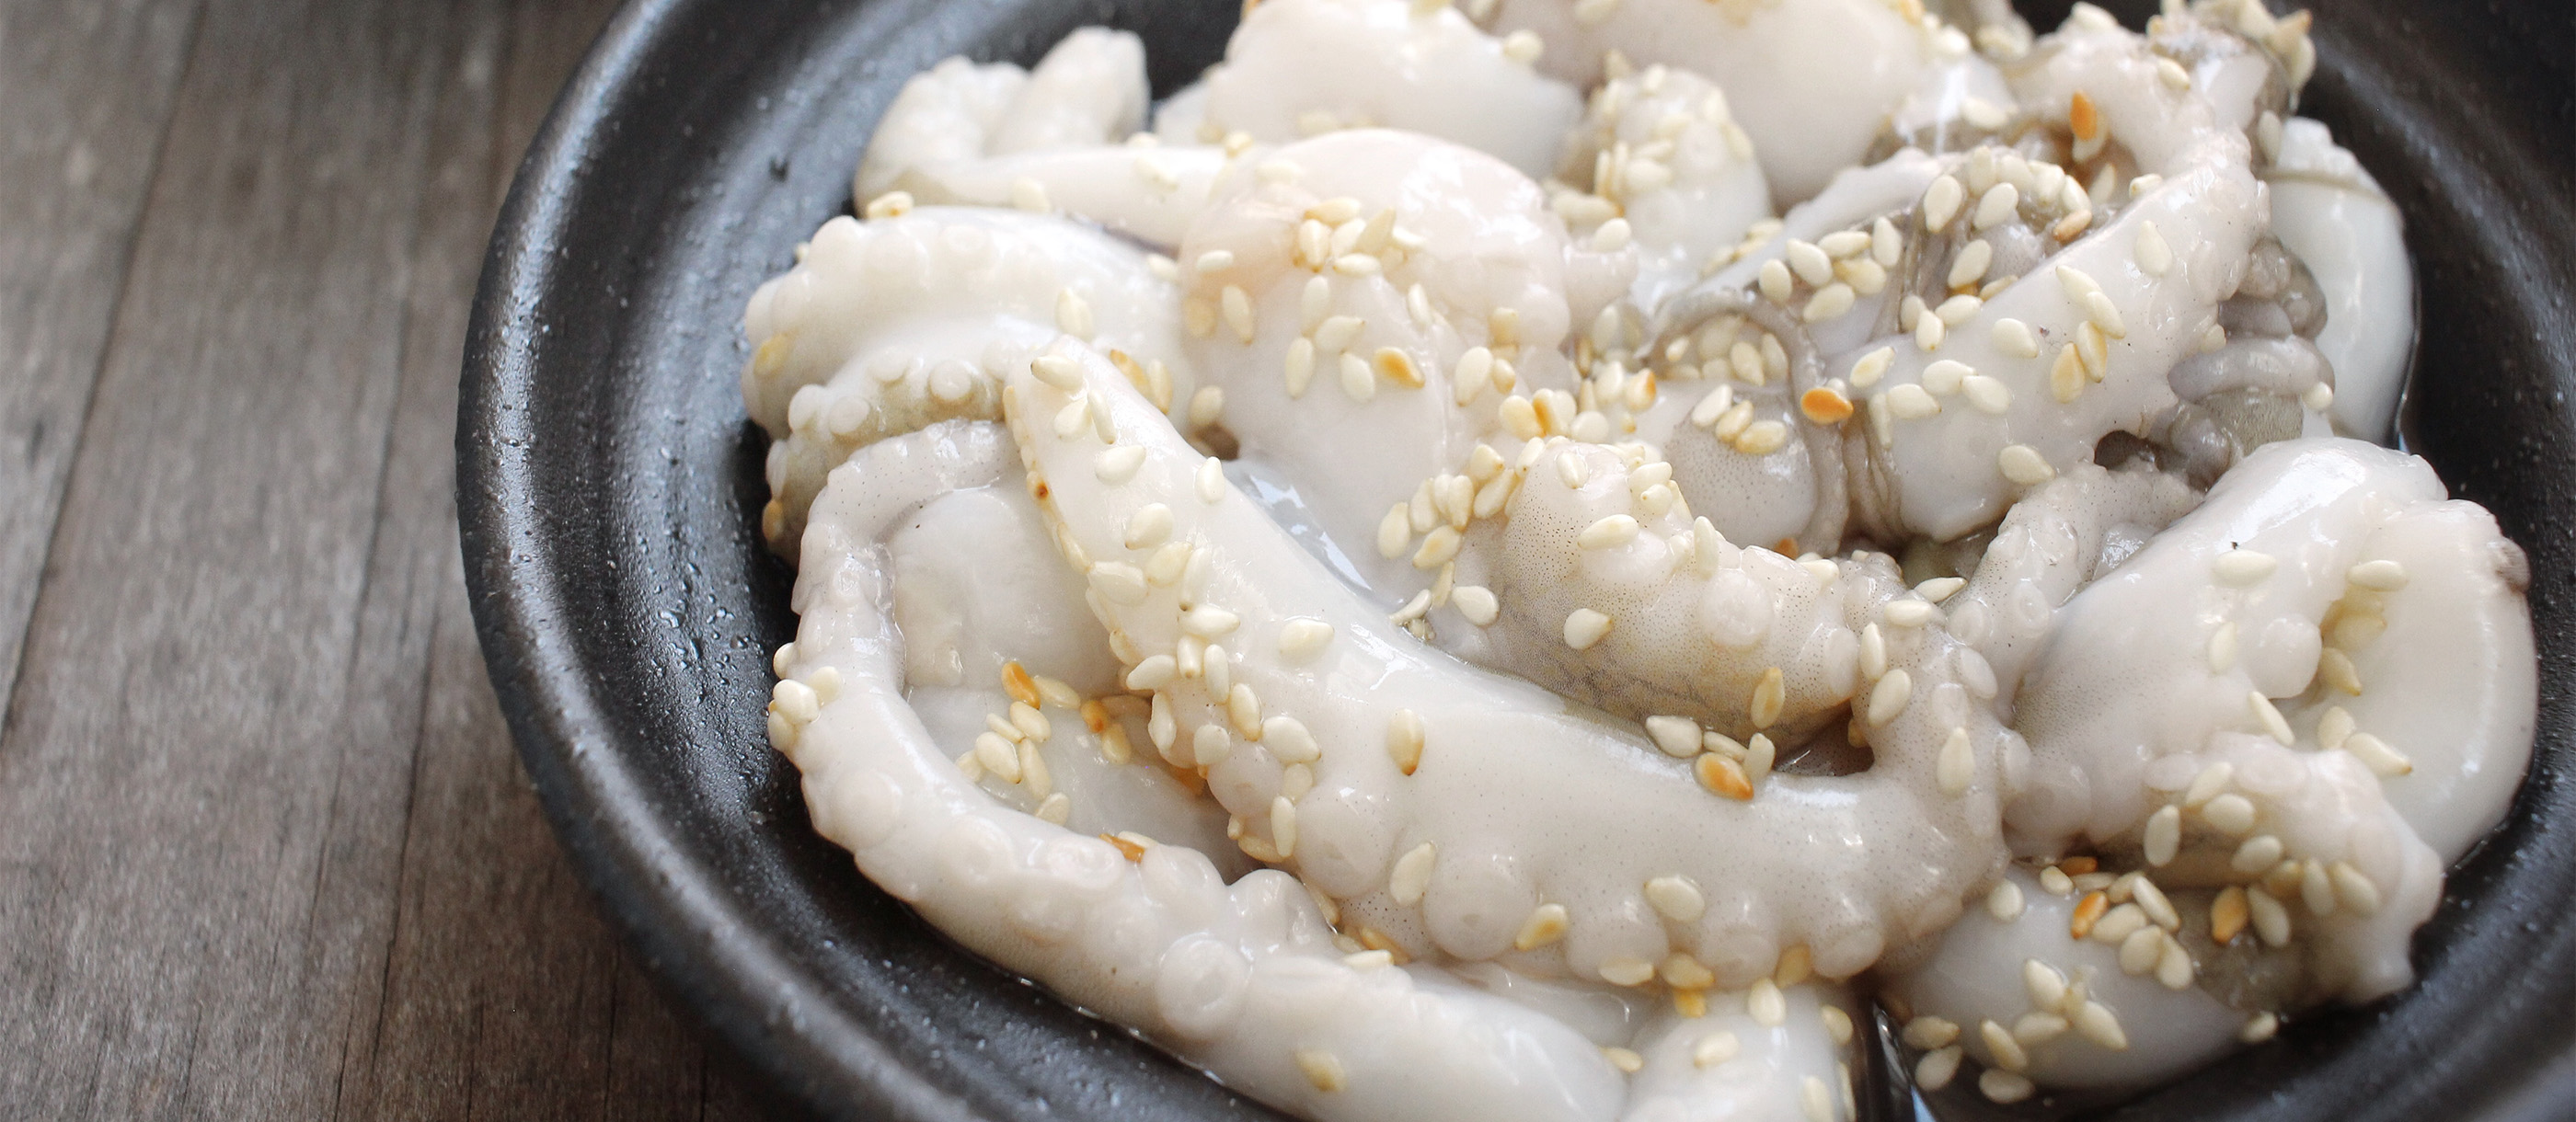 Sannakji Traditional Octopus Dish From South Korea